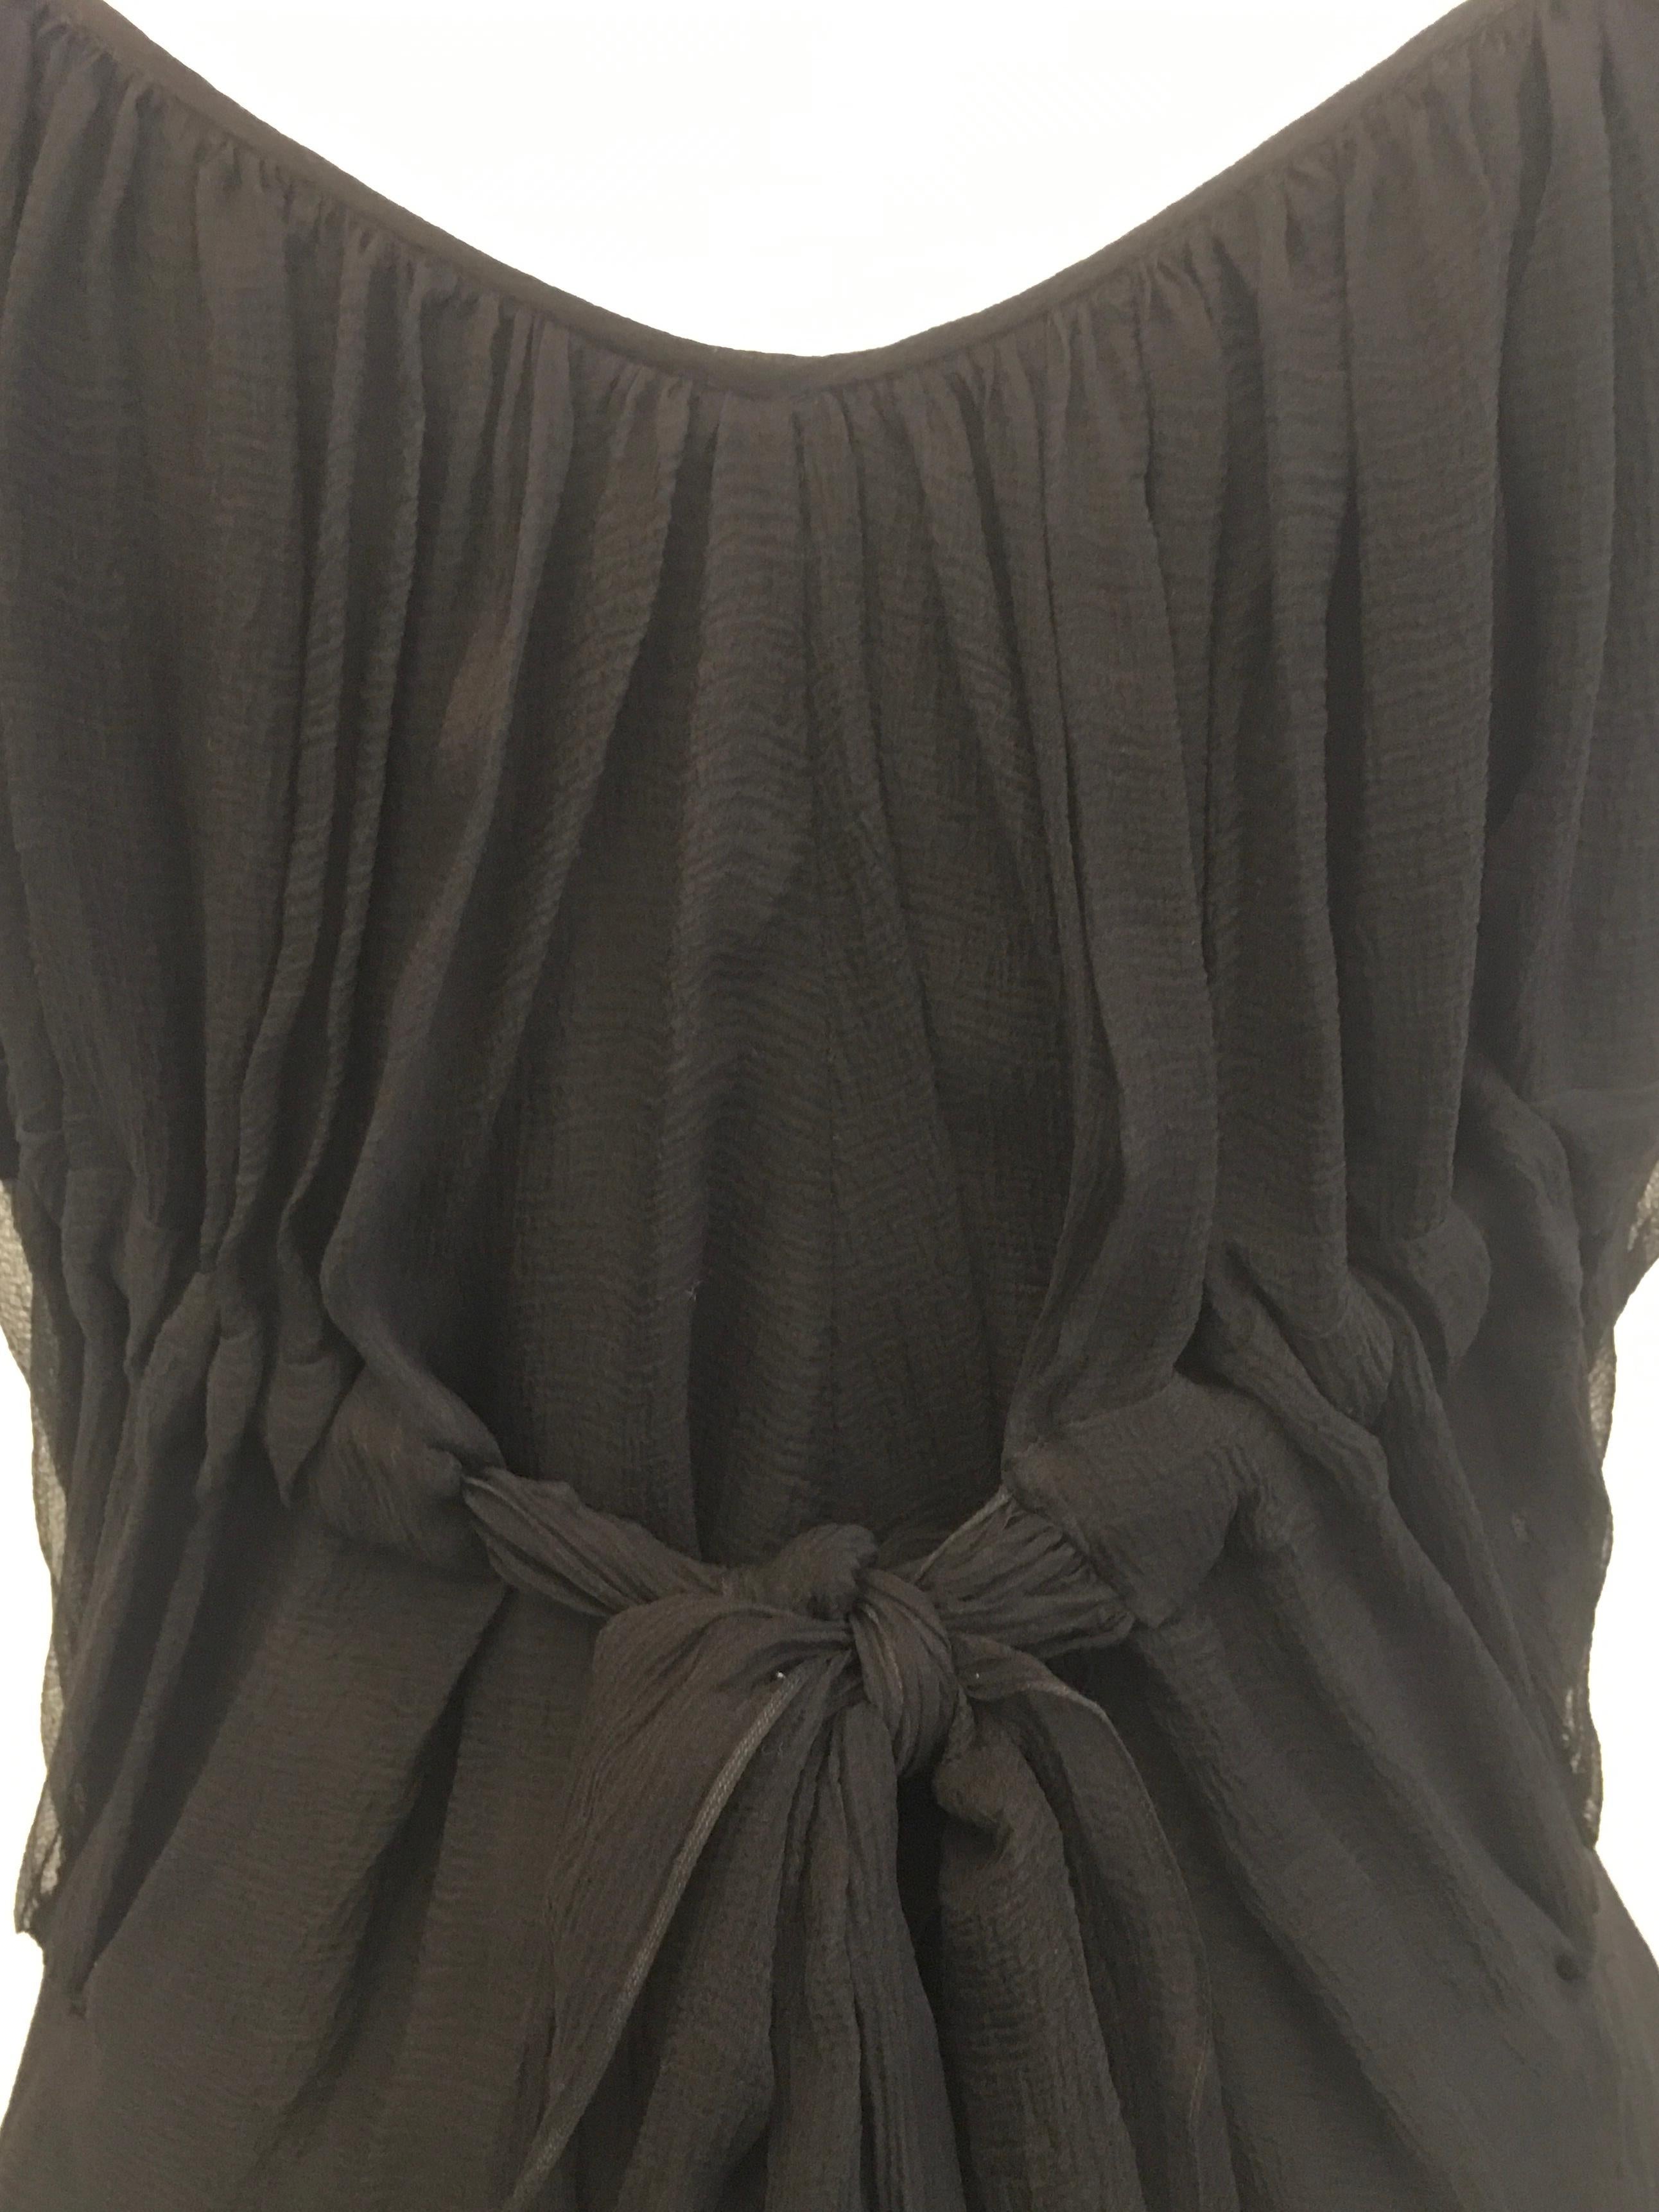 Women's JOHN GALLIANO Black silk chiffon lingerie top from the FW 2008 season For Sale